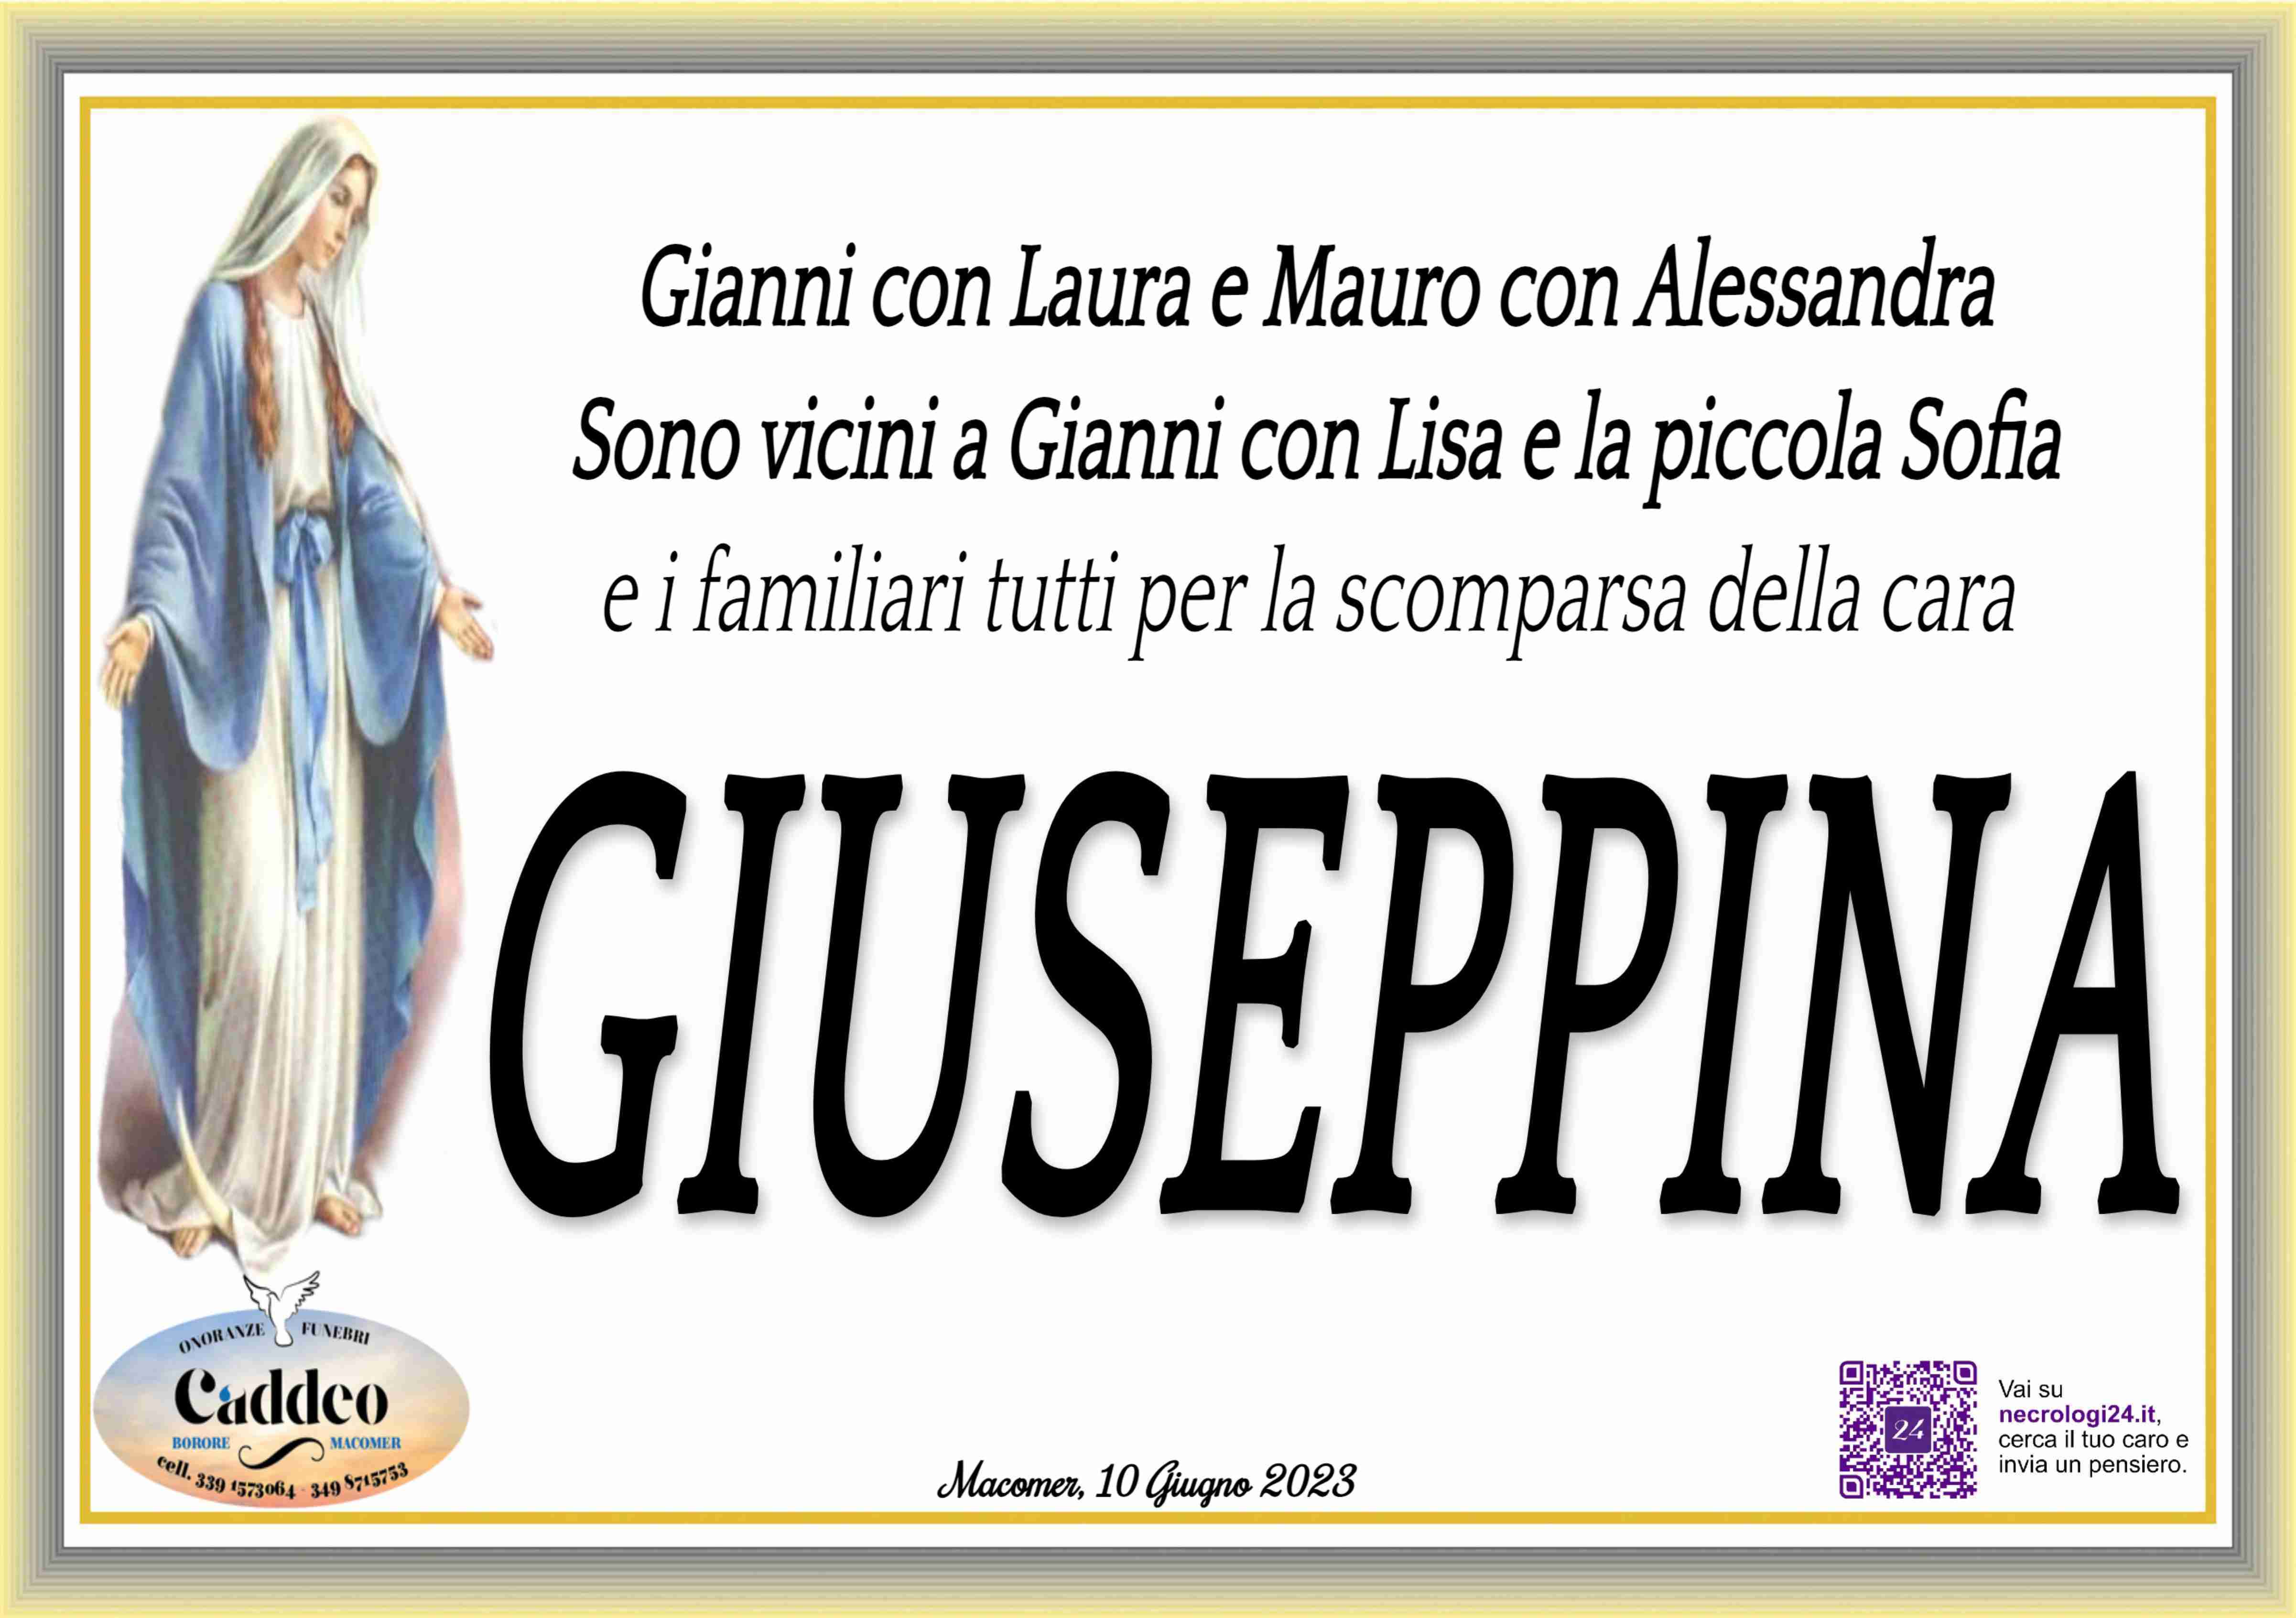 Giuseppina Ortu